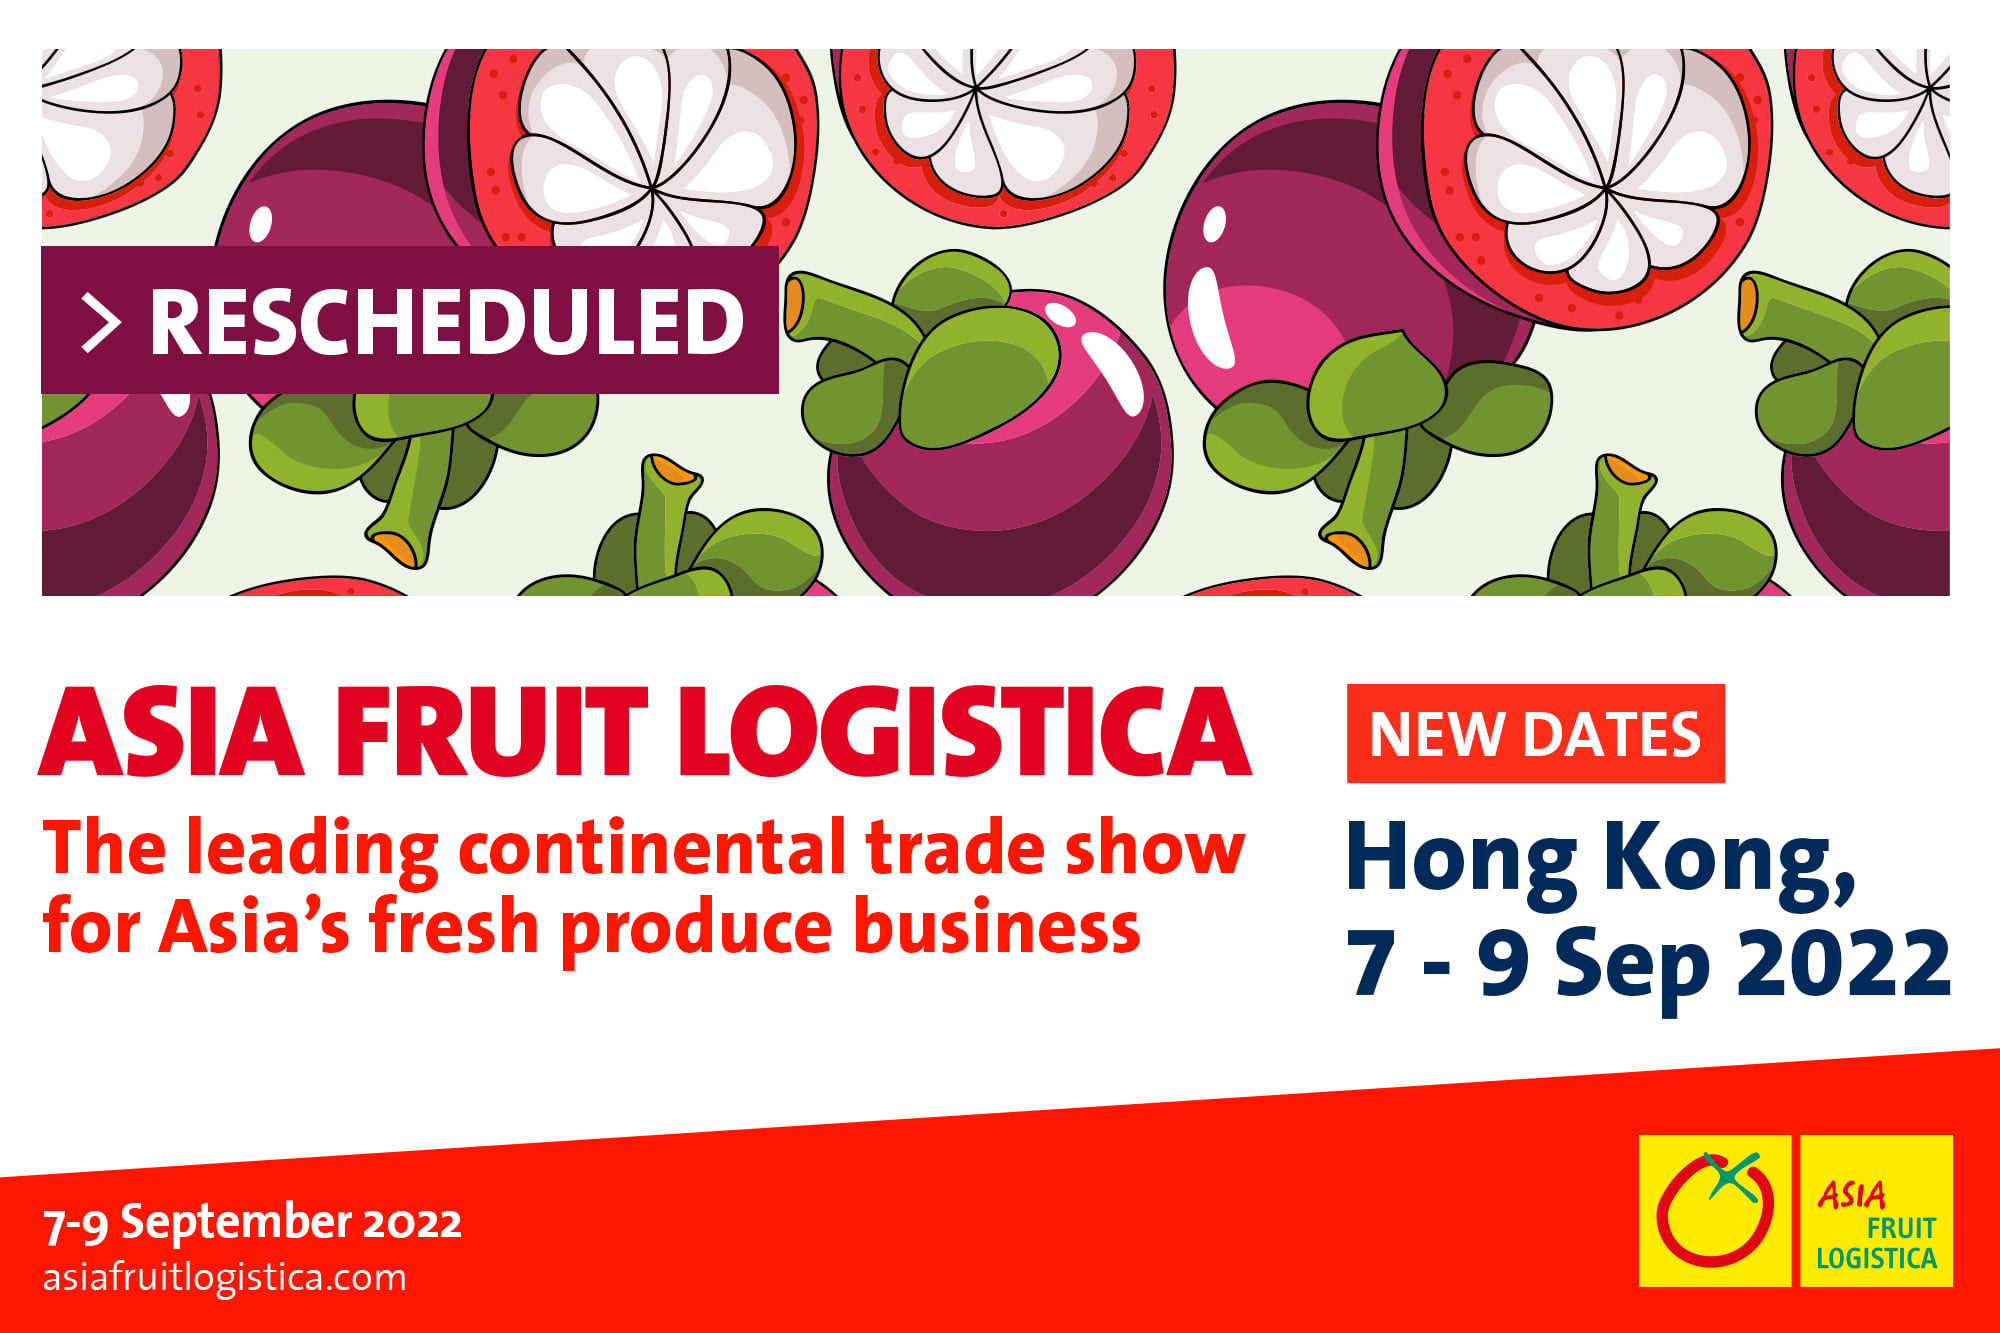 Fruit Logistica